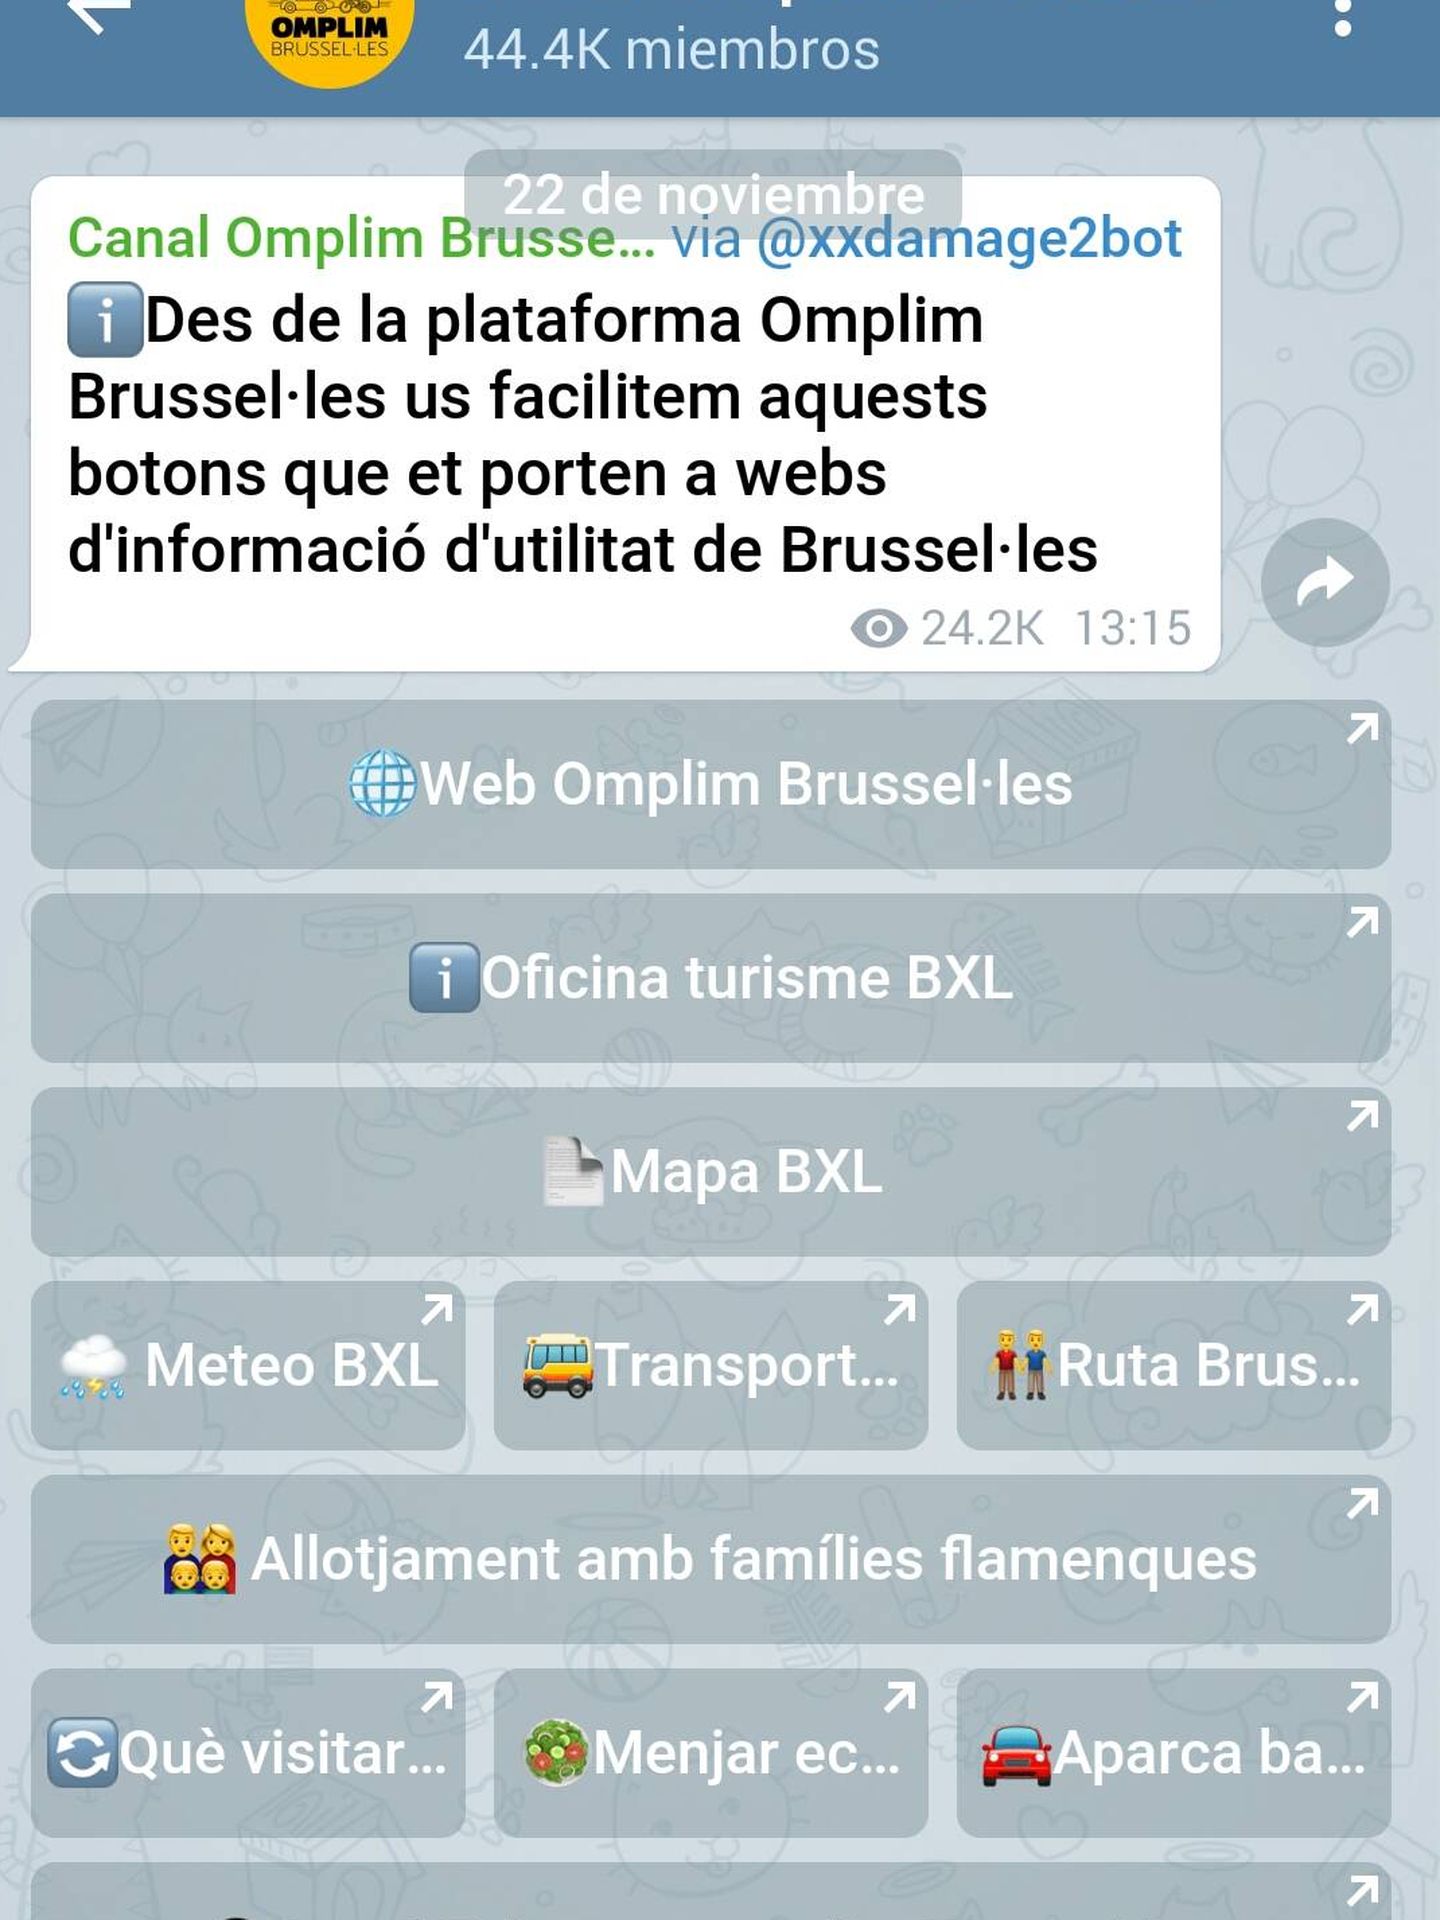 Captura del Telegram donde Omplim Brussels ofrece información.